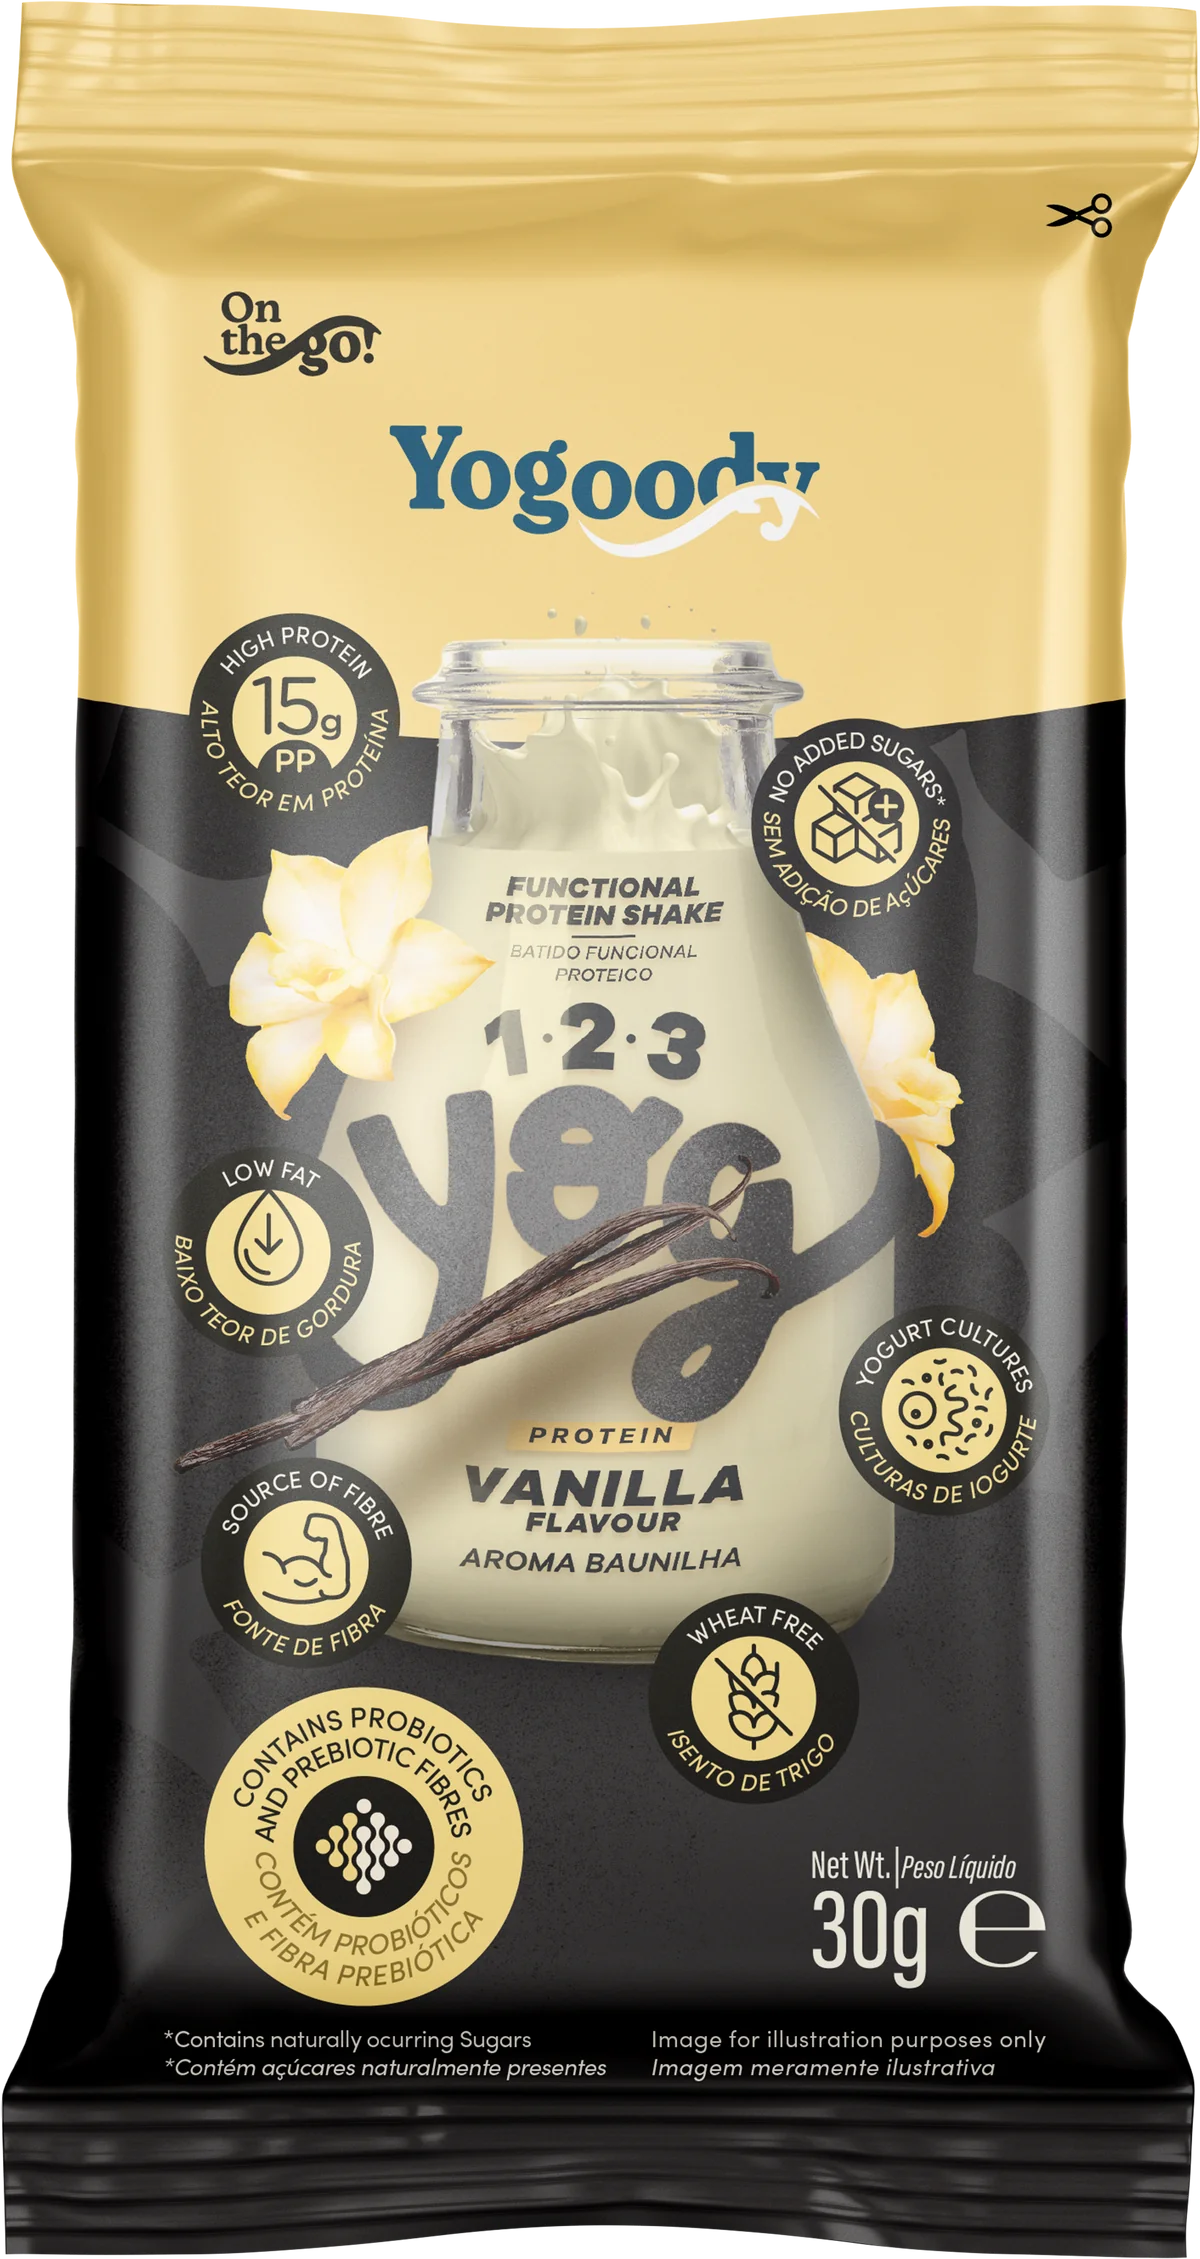 Welcome Pack - 1.2.3. YOG Protein Vanilla and Banana Shakes (10 x 30g sachets + FREE shaker)